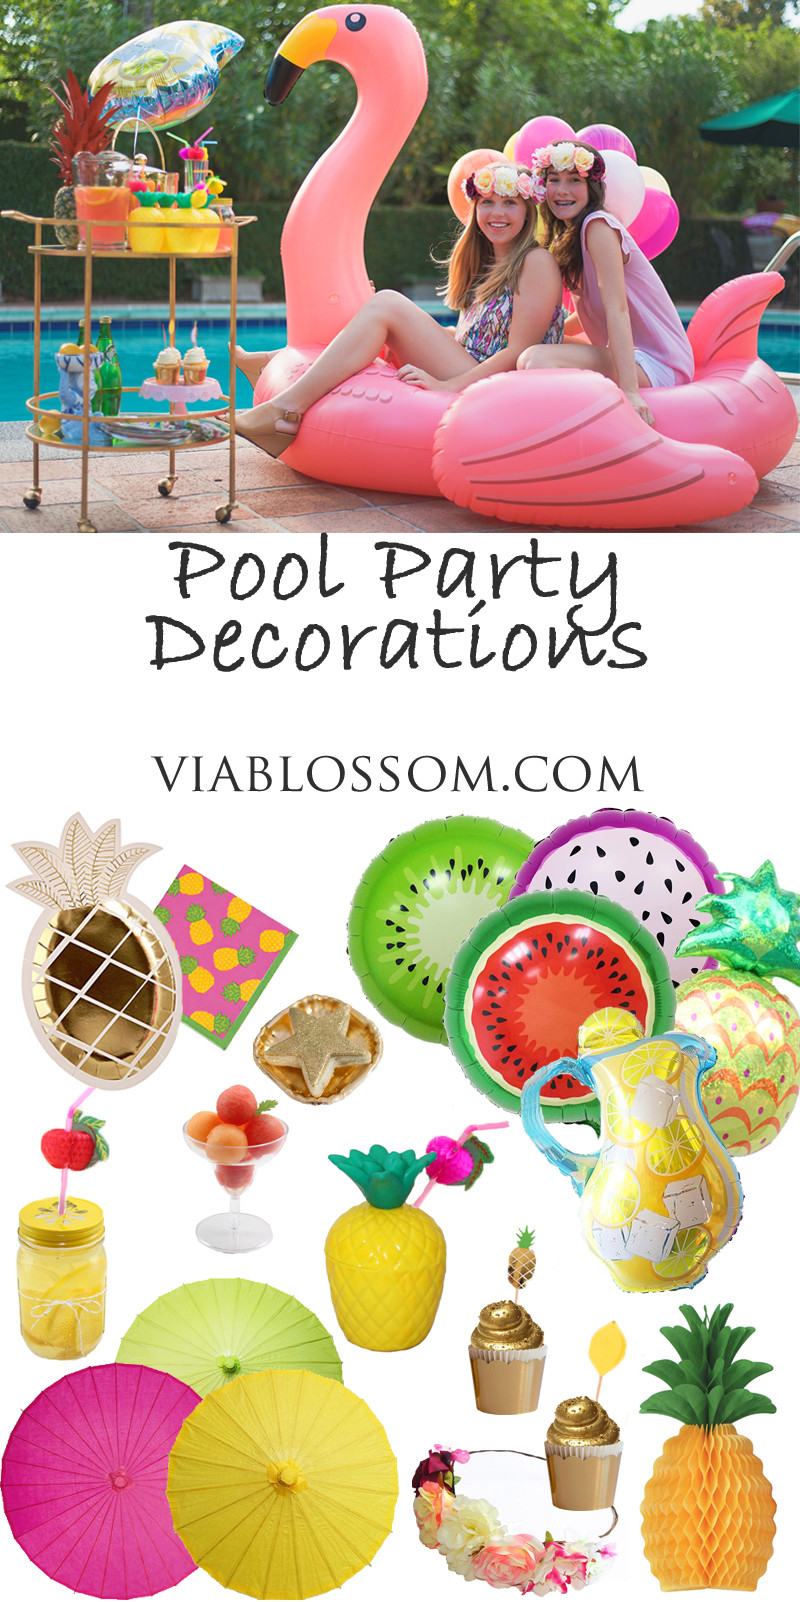 Pool Party Decoration Ideas
 Pool Party Ideas Via Blossom